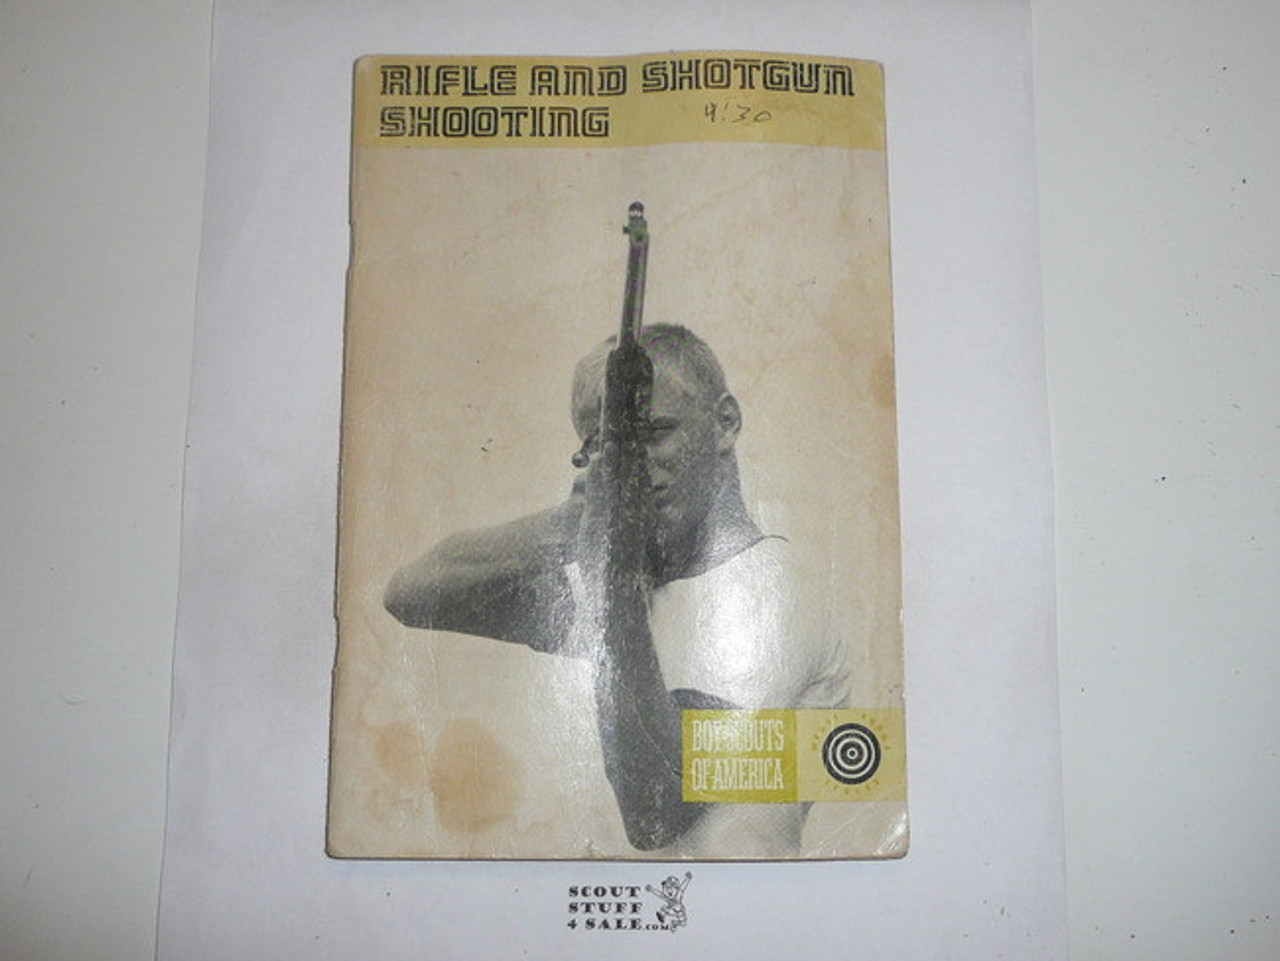 Rifle and Shotgun Shooting Merit Badge Pamphlet, Type 8, Green Band Cover, 1-74 Printing